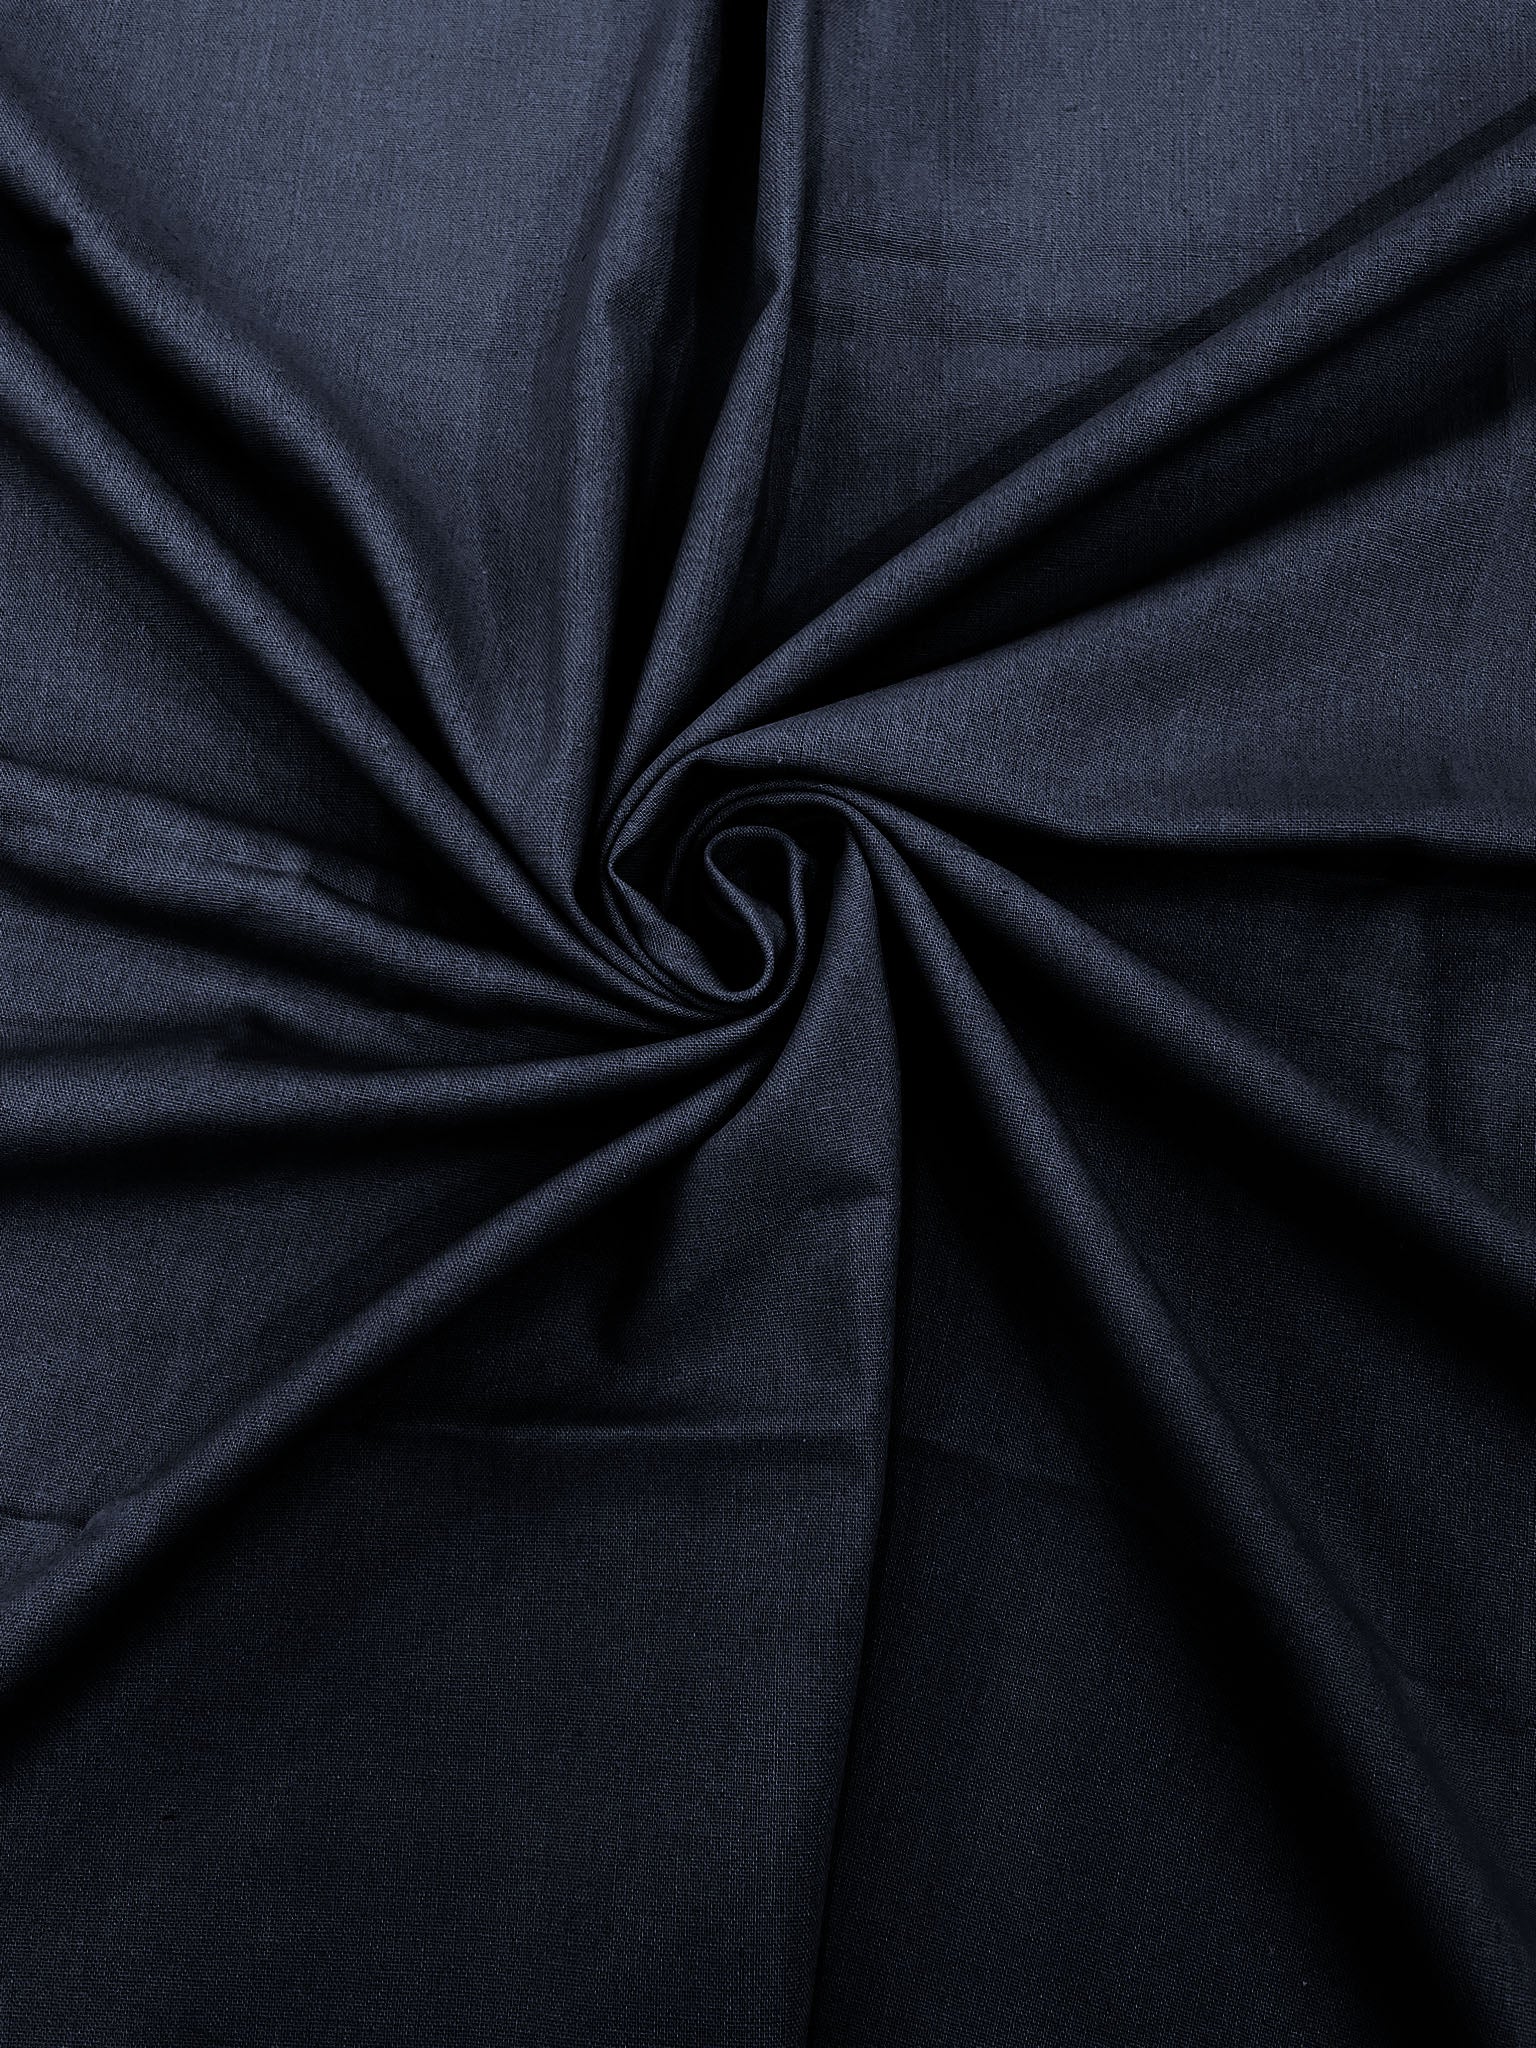 Navy Blue Medium Weight Natural Linen Fabric/50 " Wide/Clothing